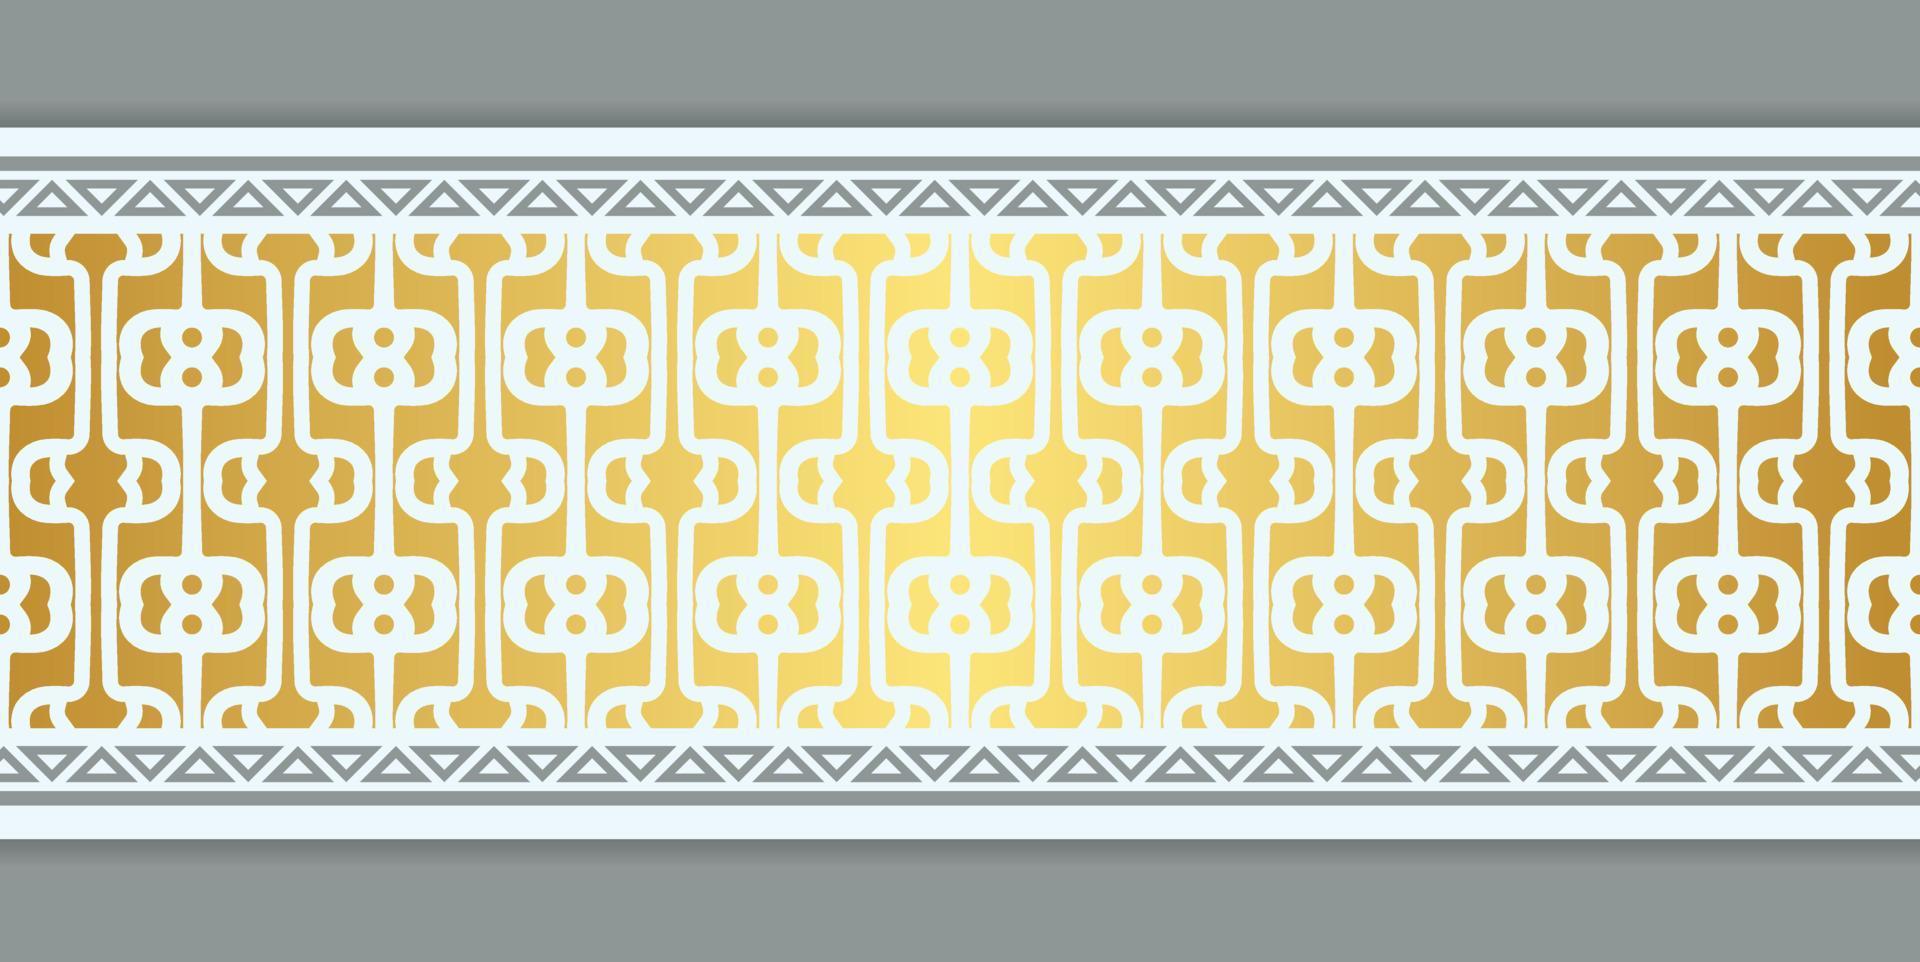 modelo de borda ornamental dourada elegante vetor